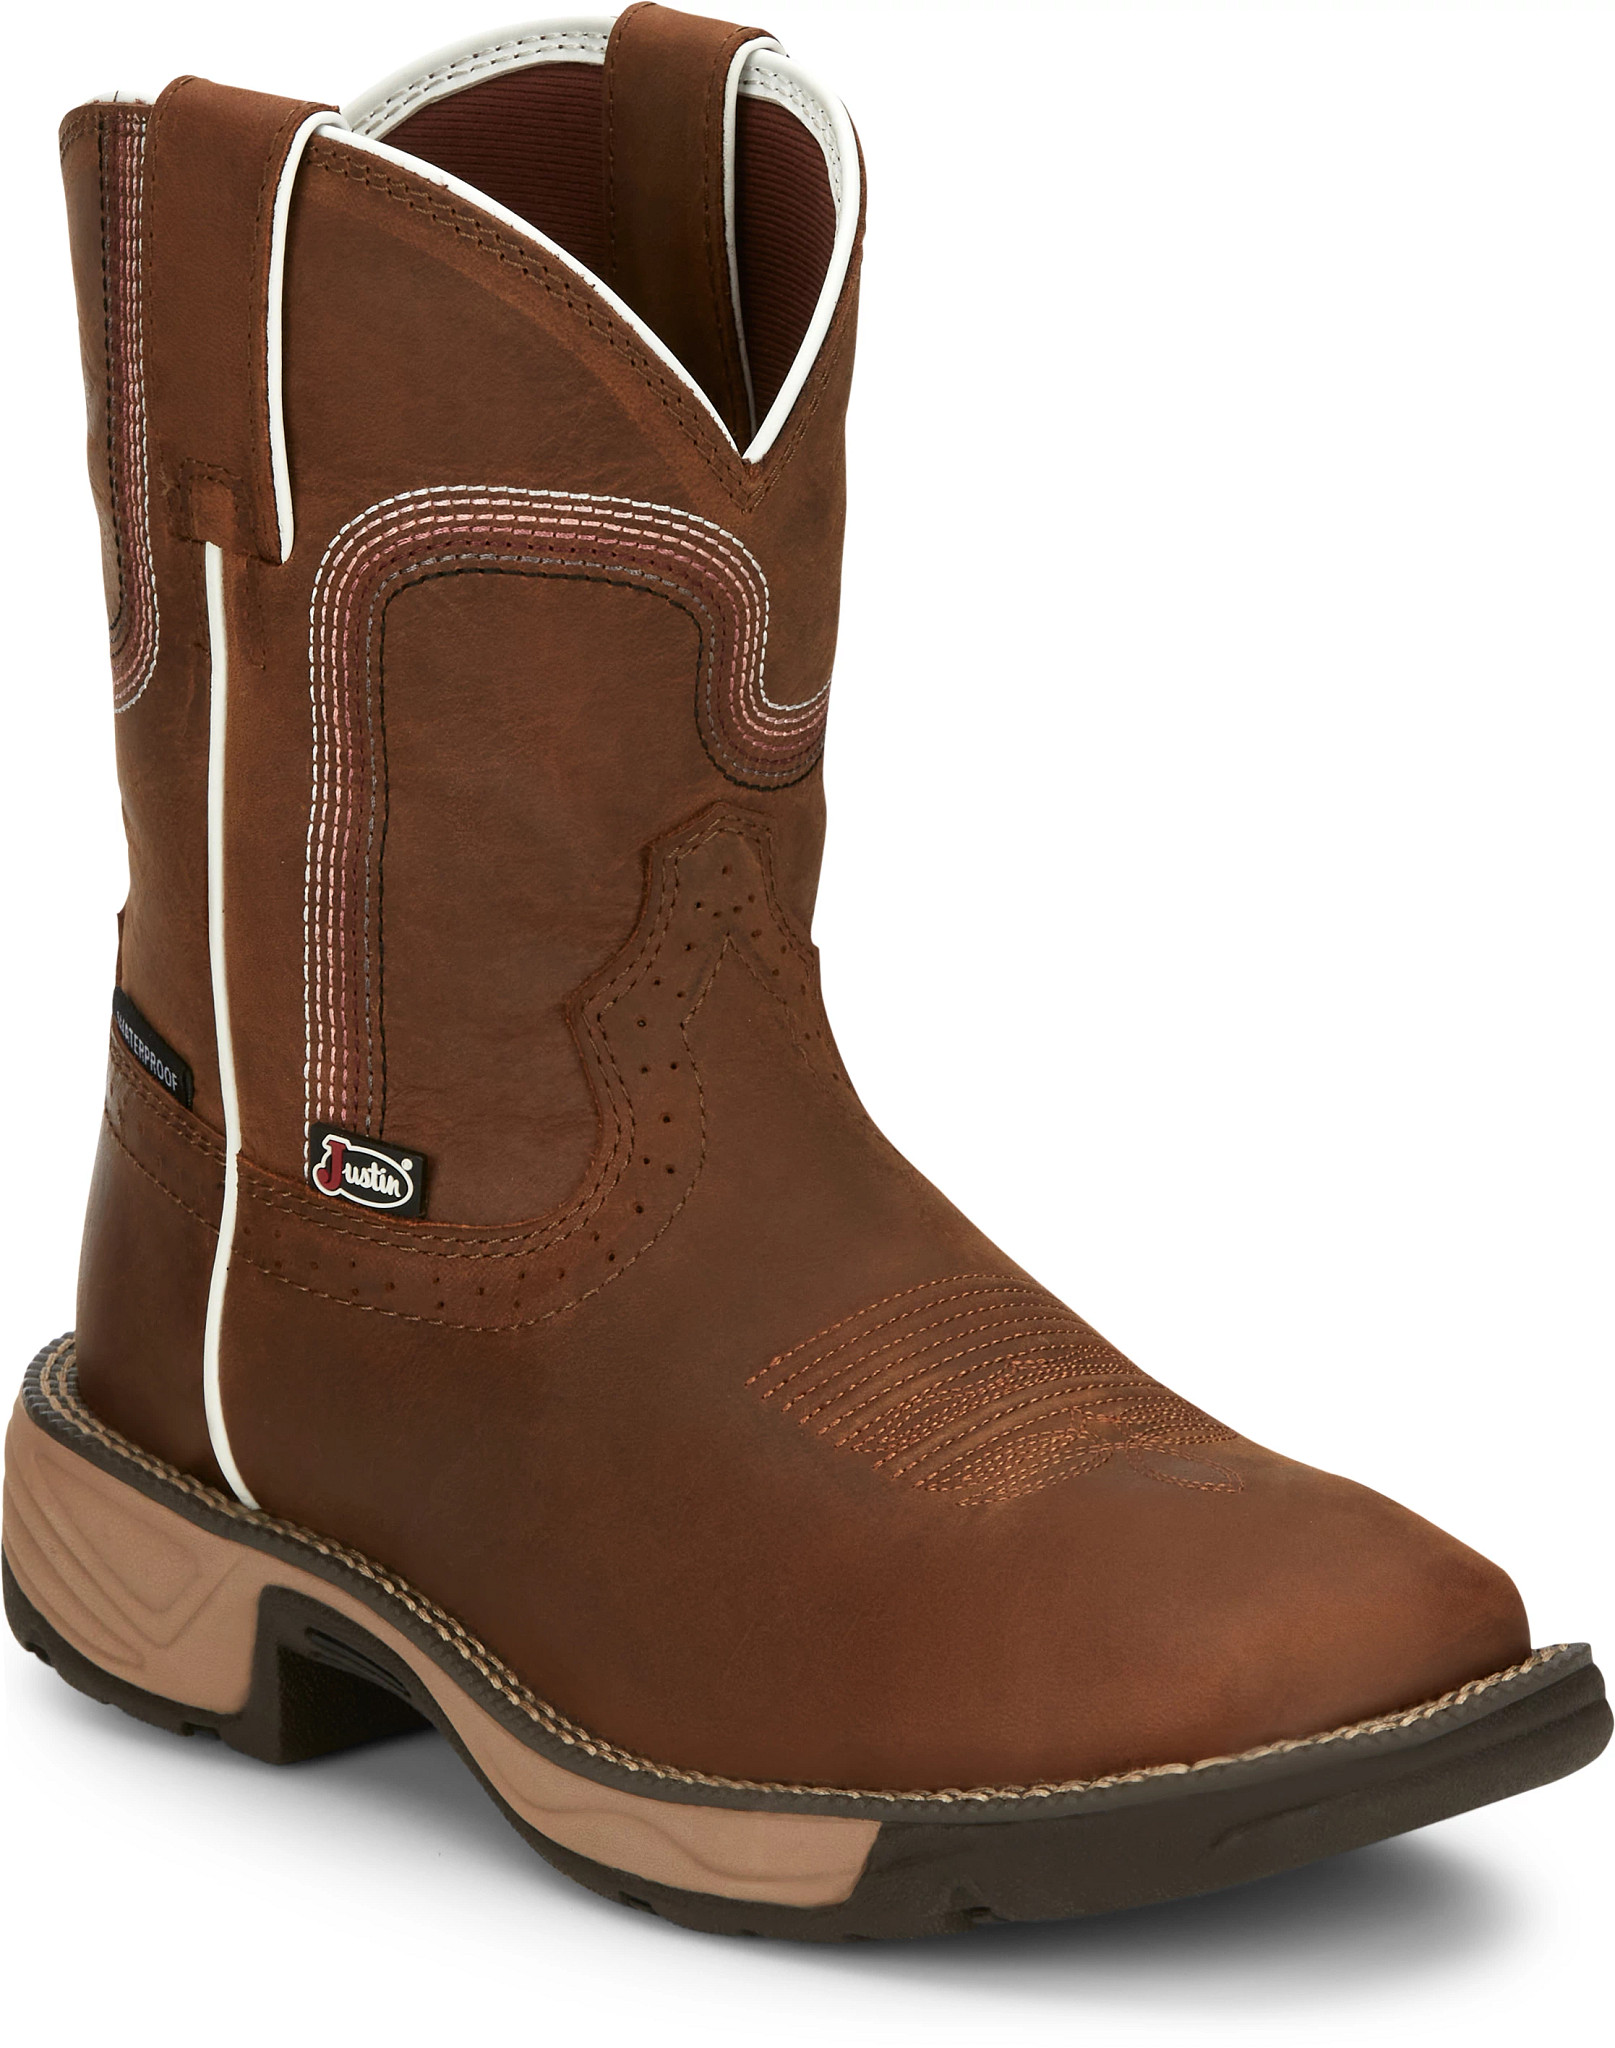 Justin Original Workboots Womens Stampede Rush 11 Inch Waterproof Steel Toe Work Work Safety Shoes Casual Brown 